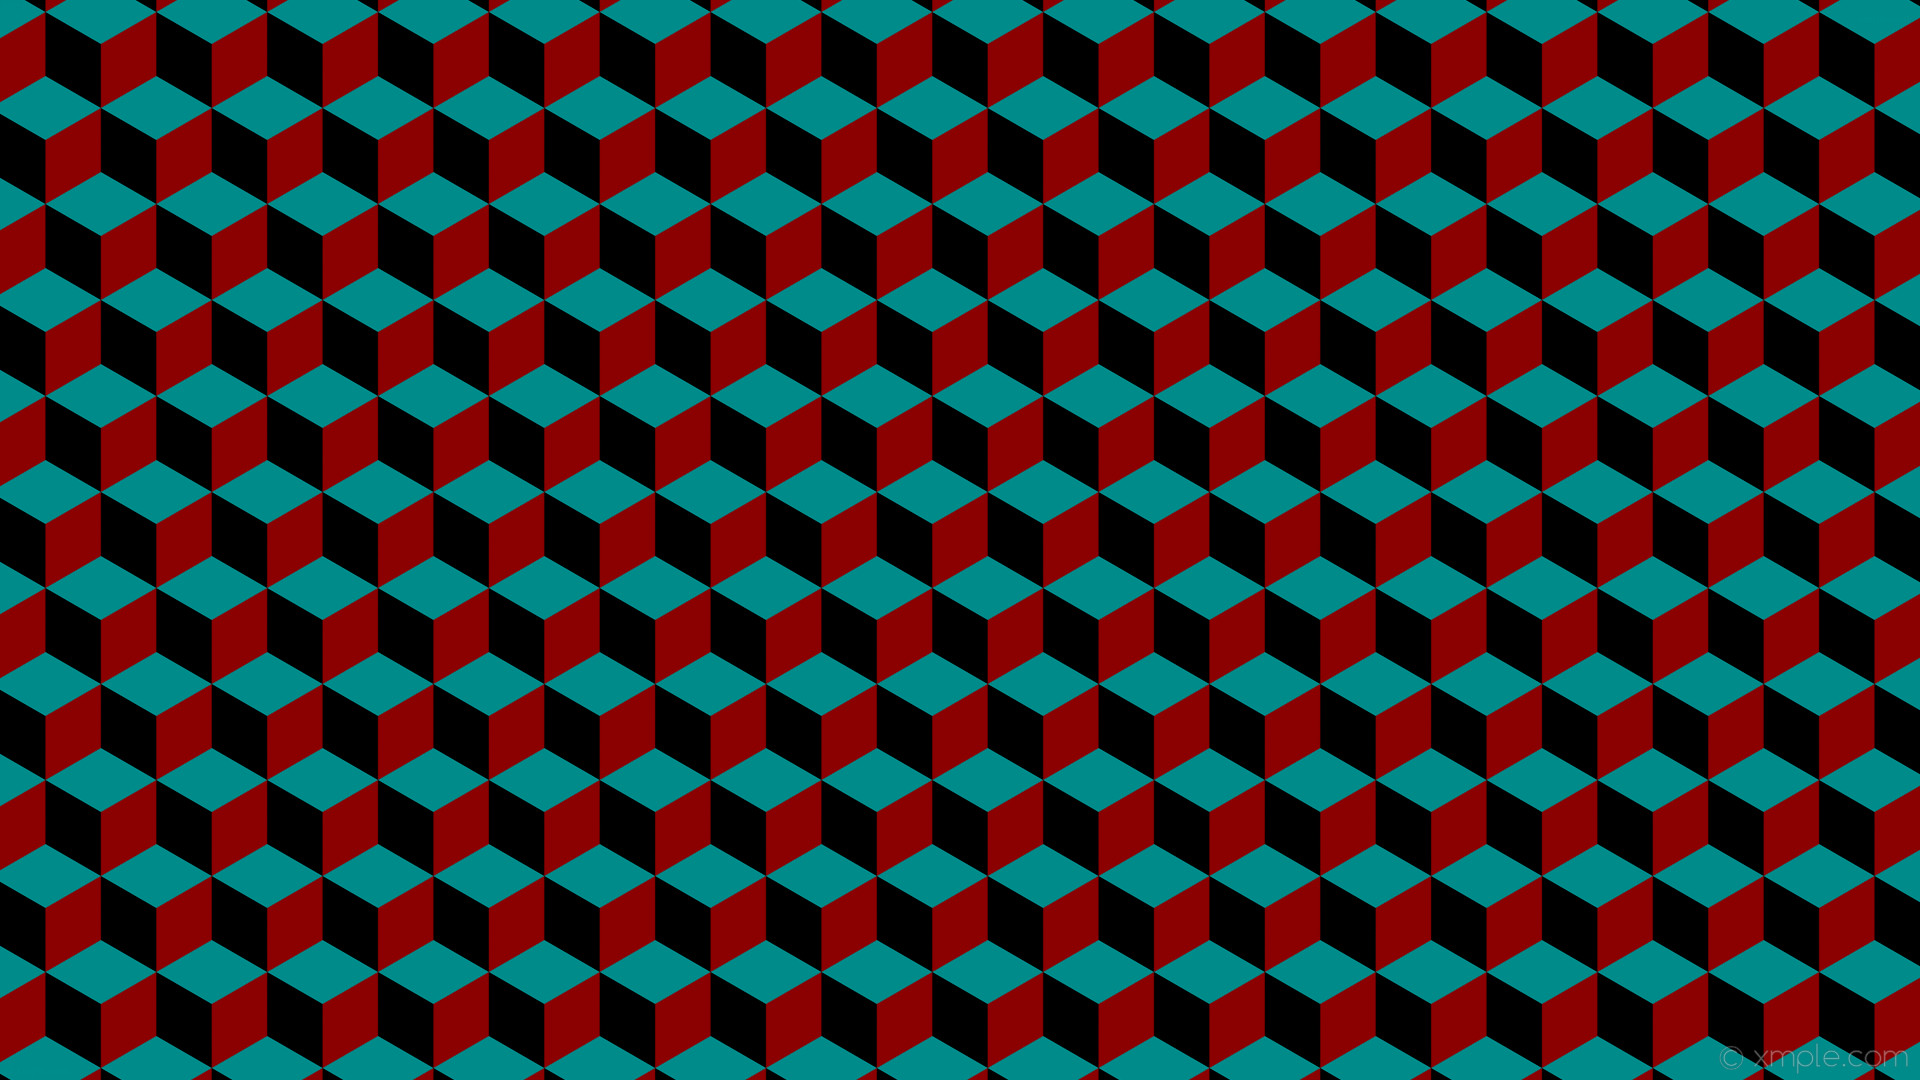 1920x1080 wallpaper green 3d cubes red black dark red dark cyan #8b0000 #008b8b  #000000